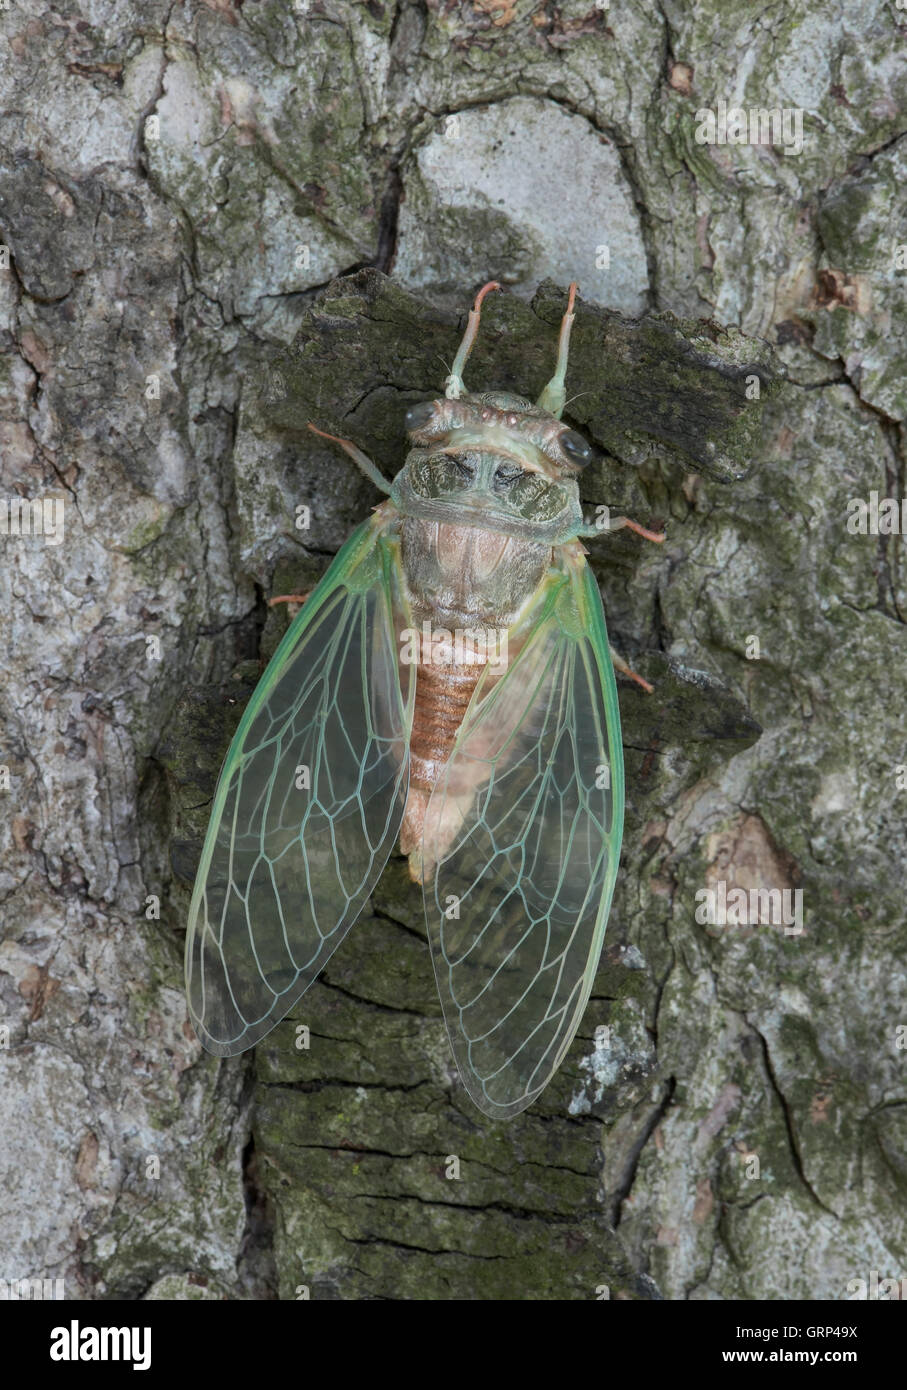 Adult Cicada 65